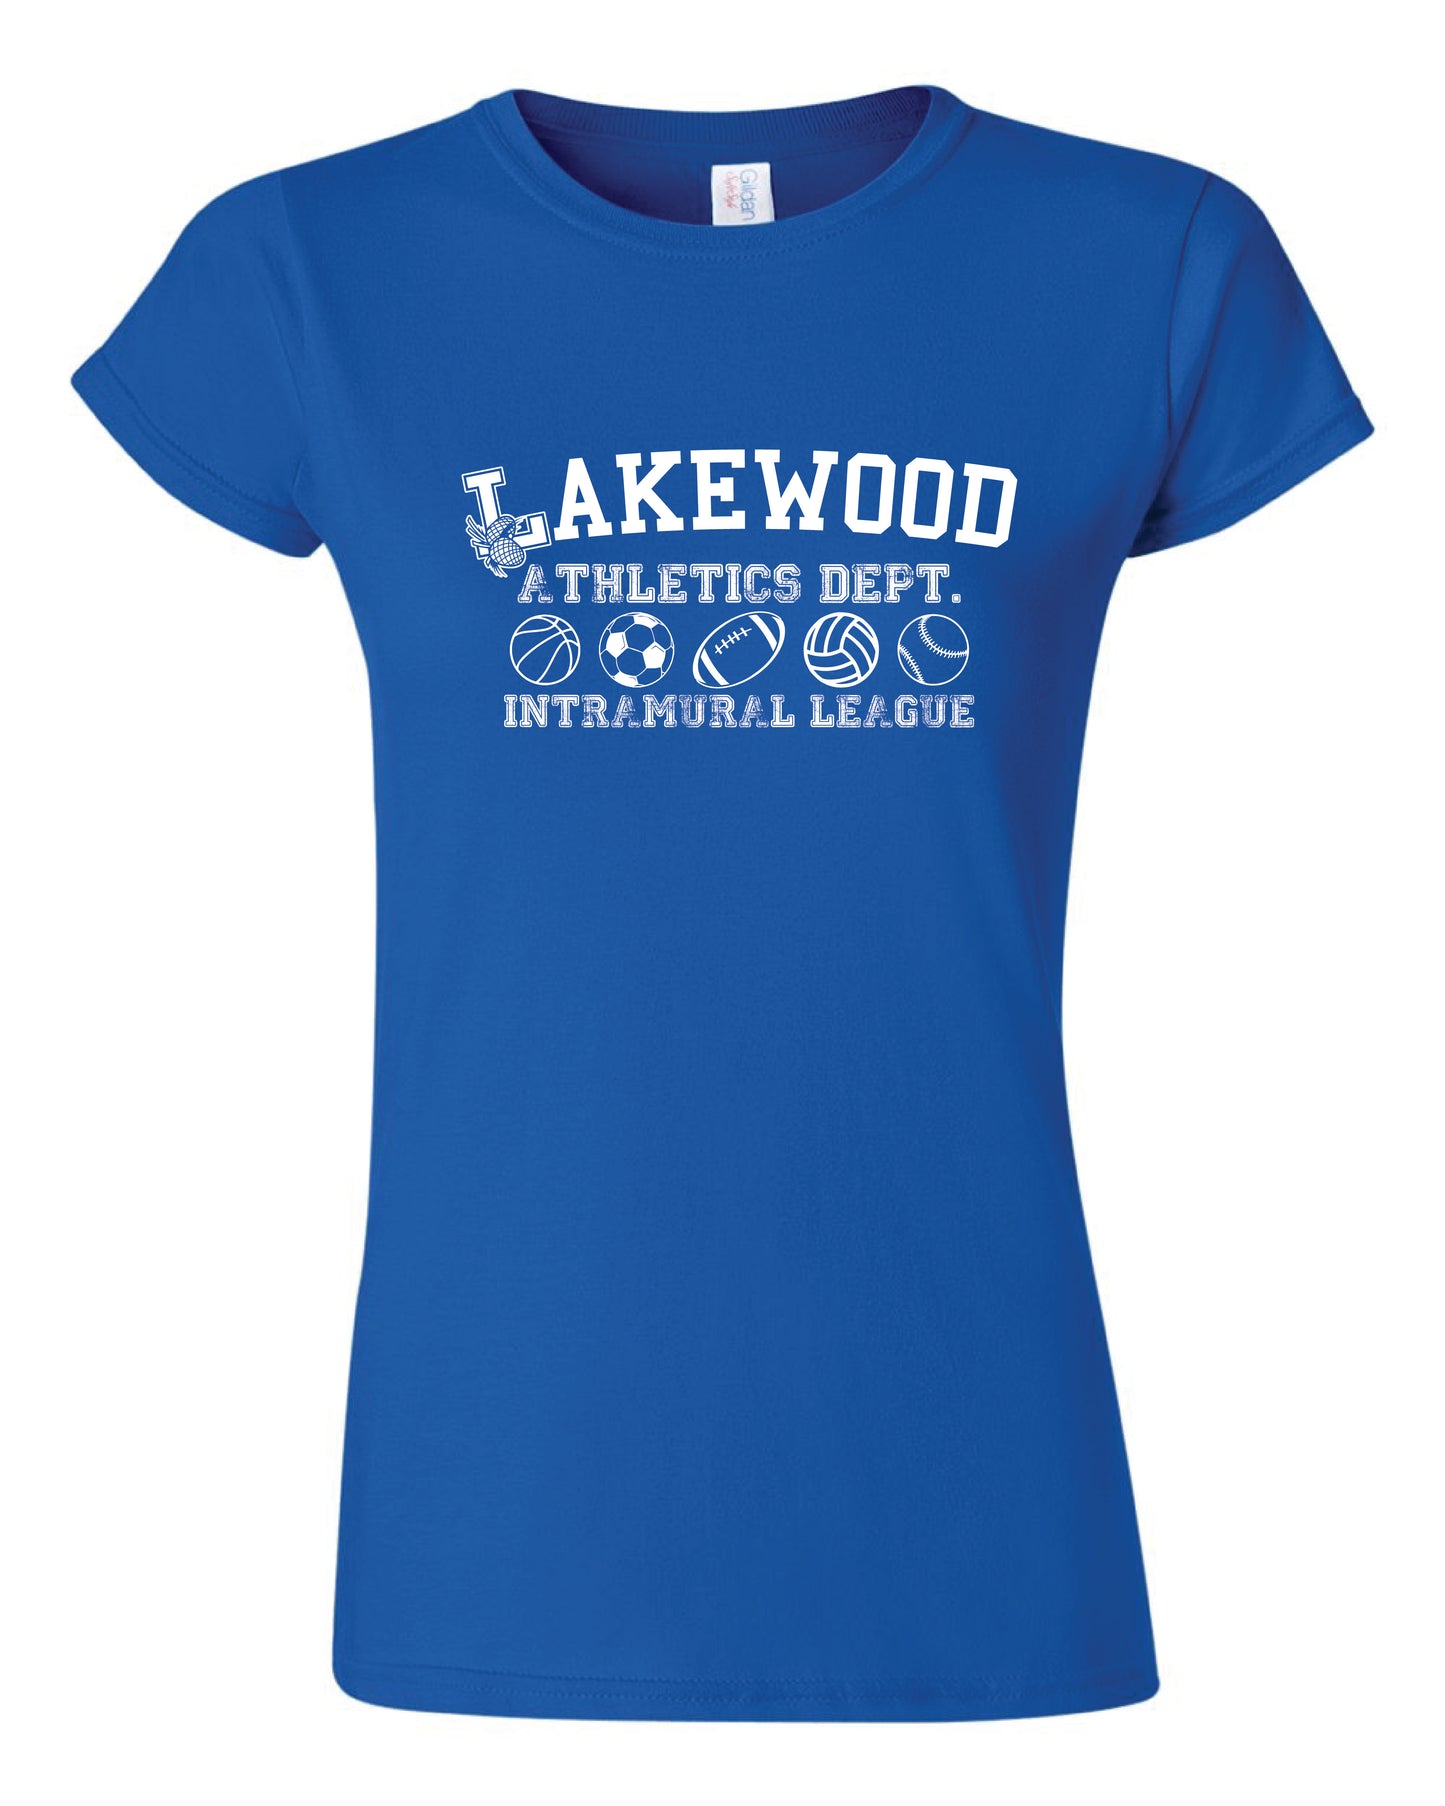 Lakewood Sportswear Intramural Tee